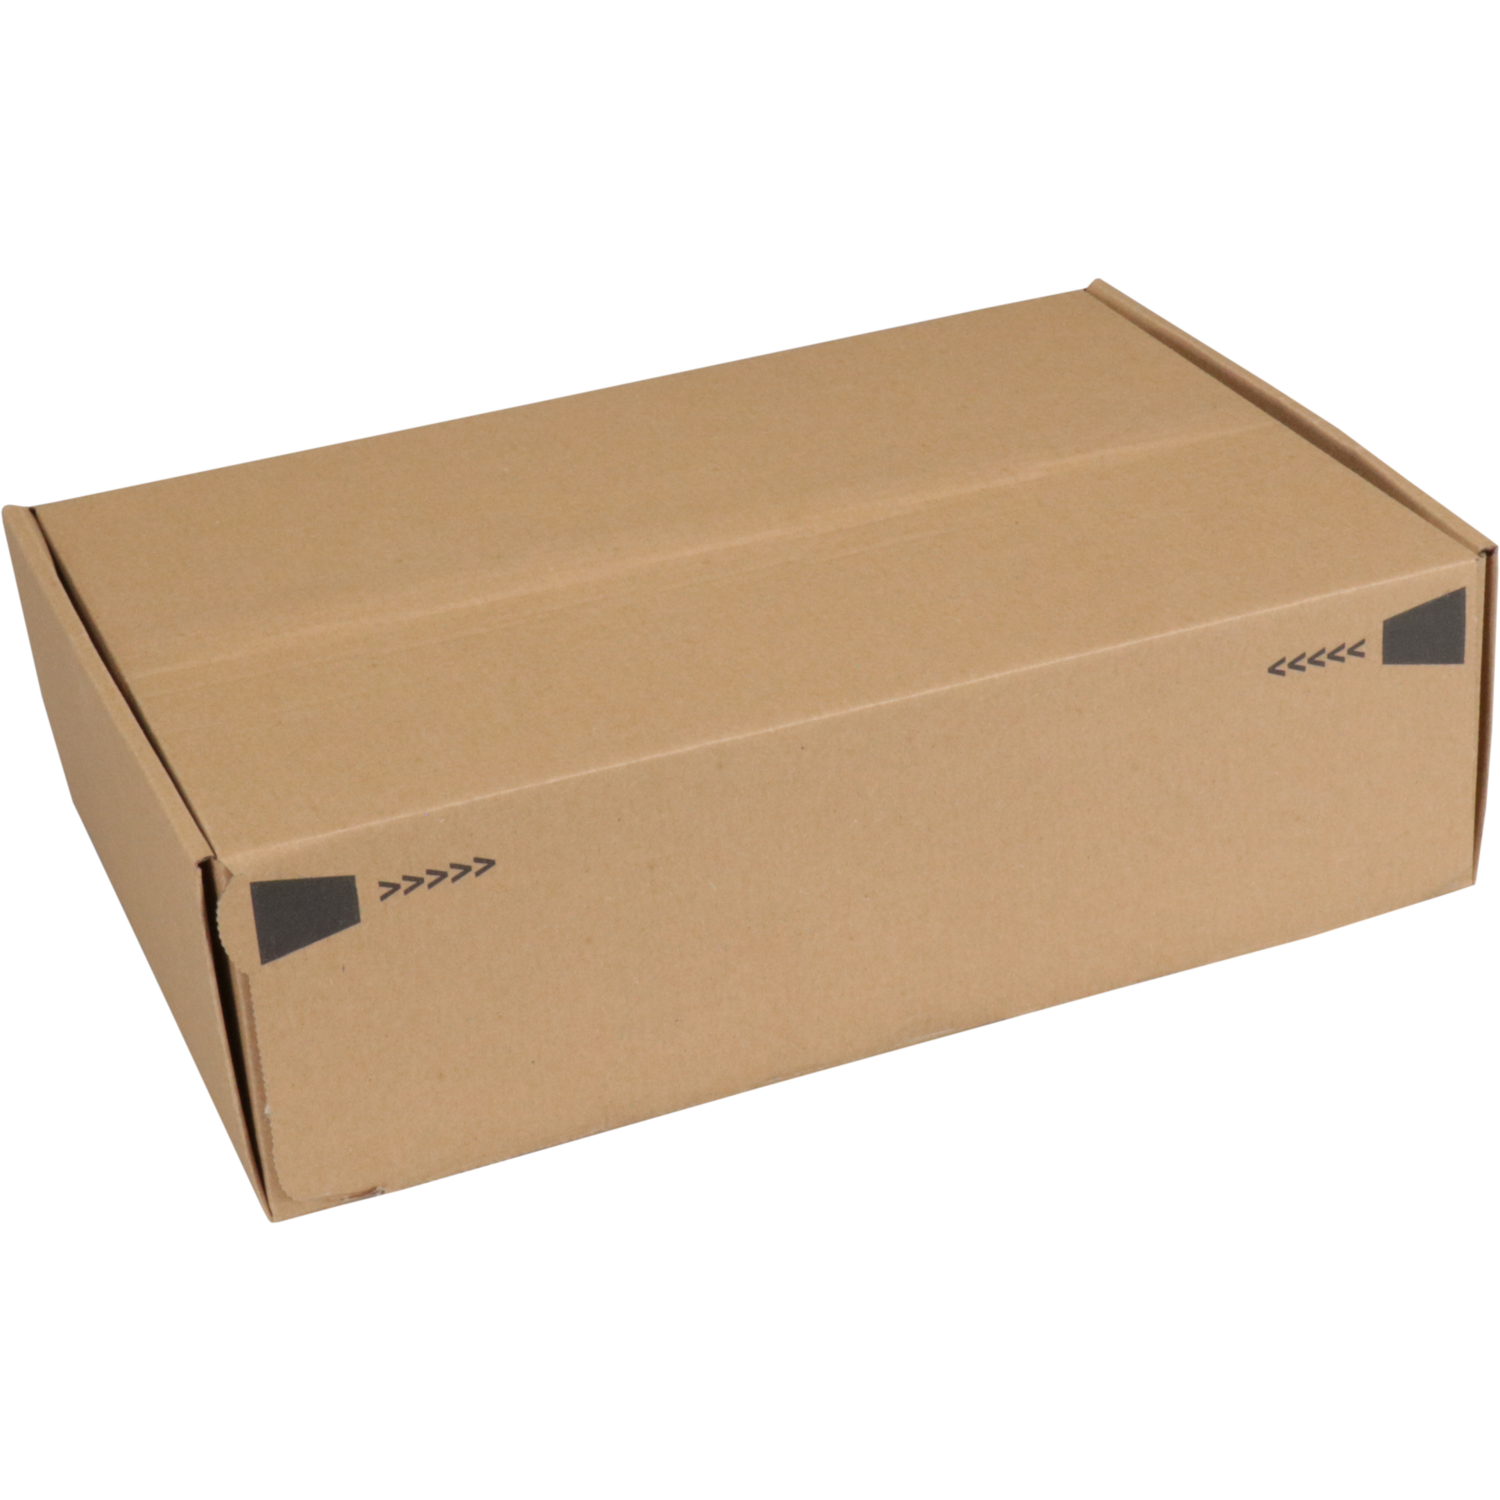 SendProof® Postpaketkarton, wellpappe, 305x210x91mm, braun 1